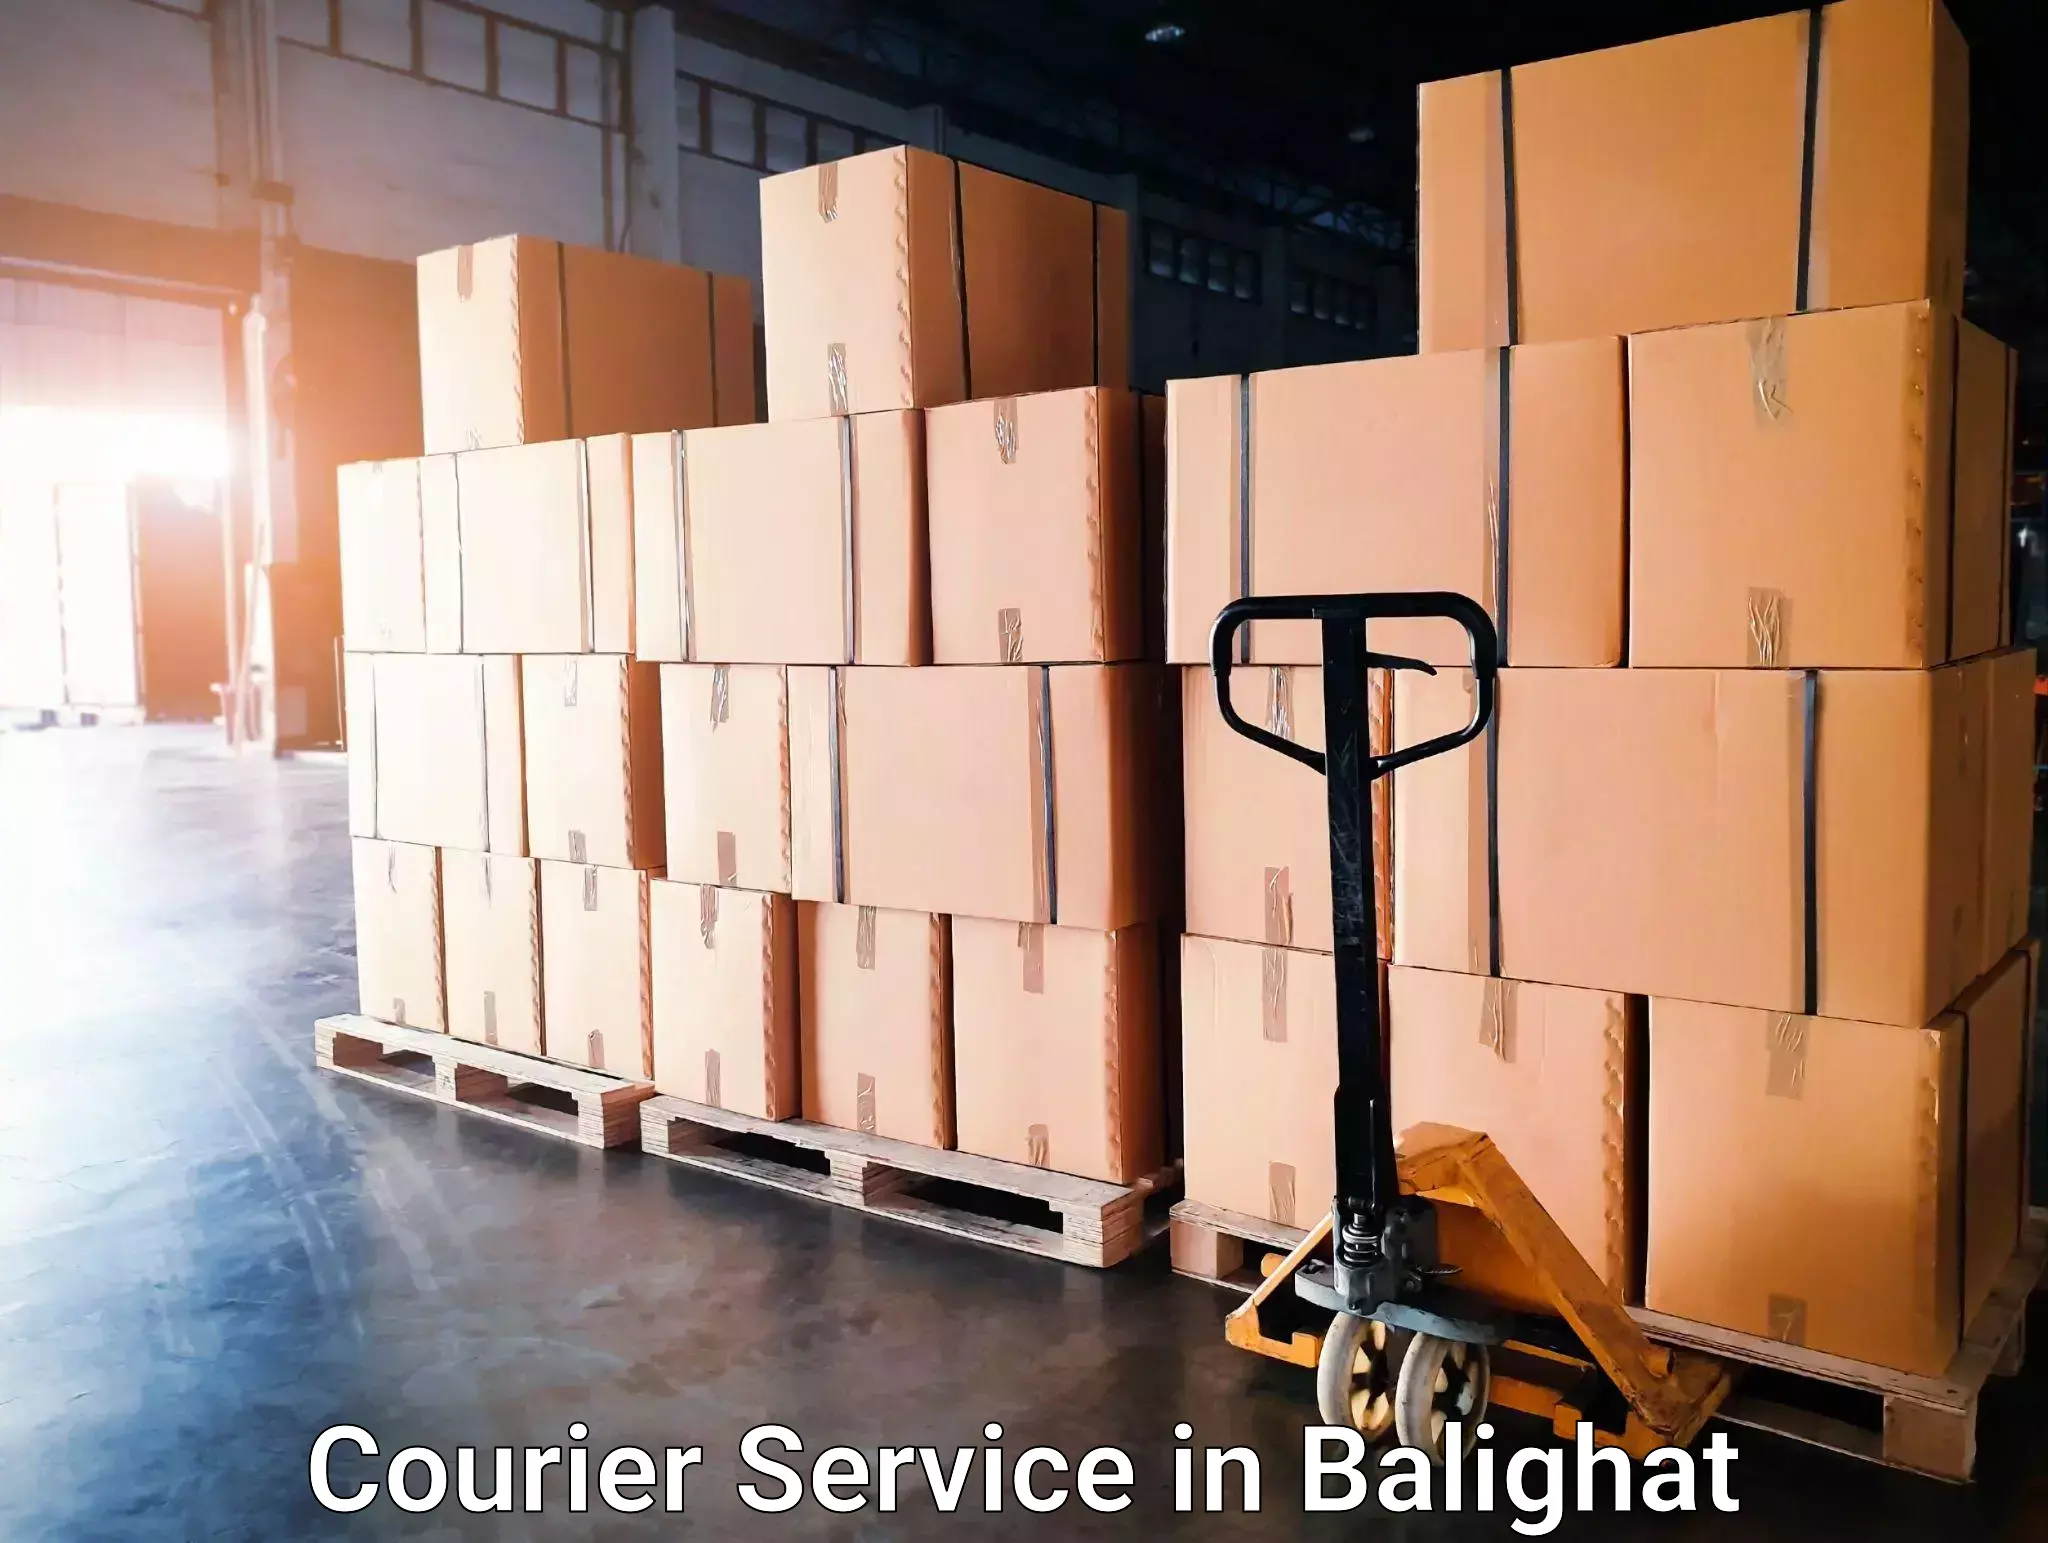 Efficient parcel service in Balighat